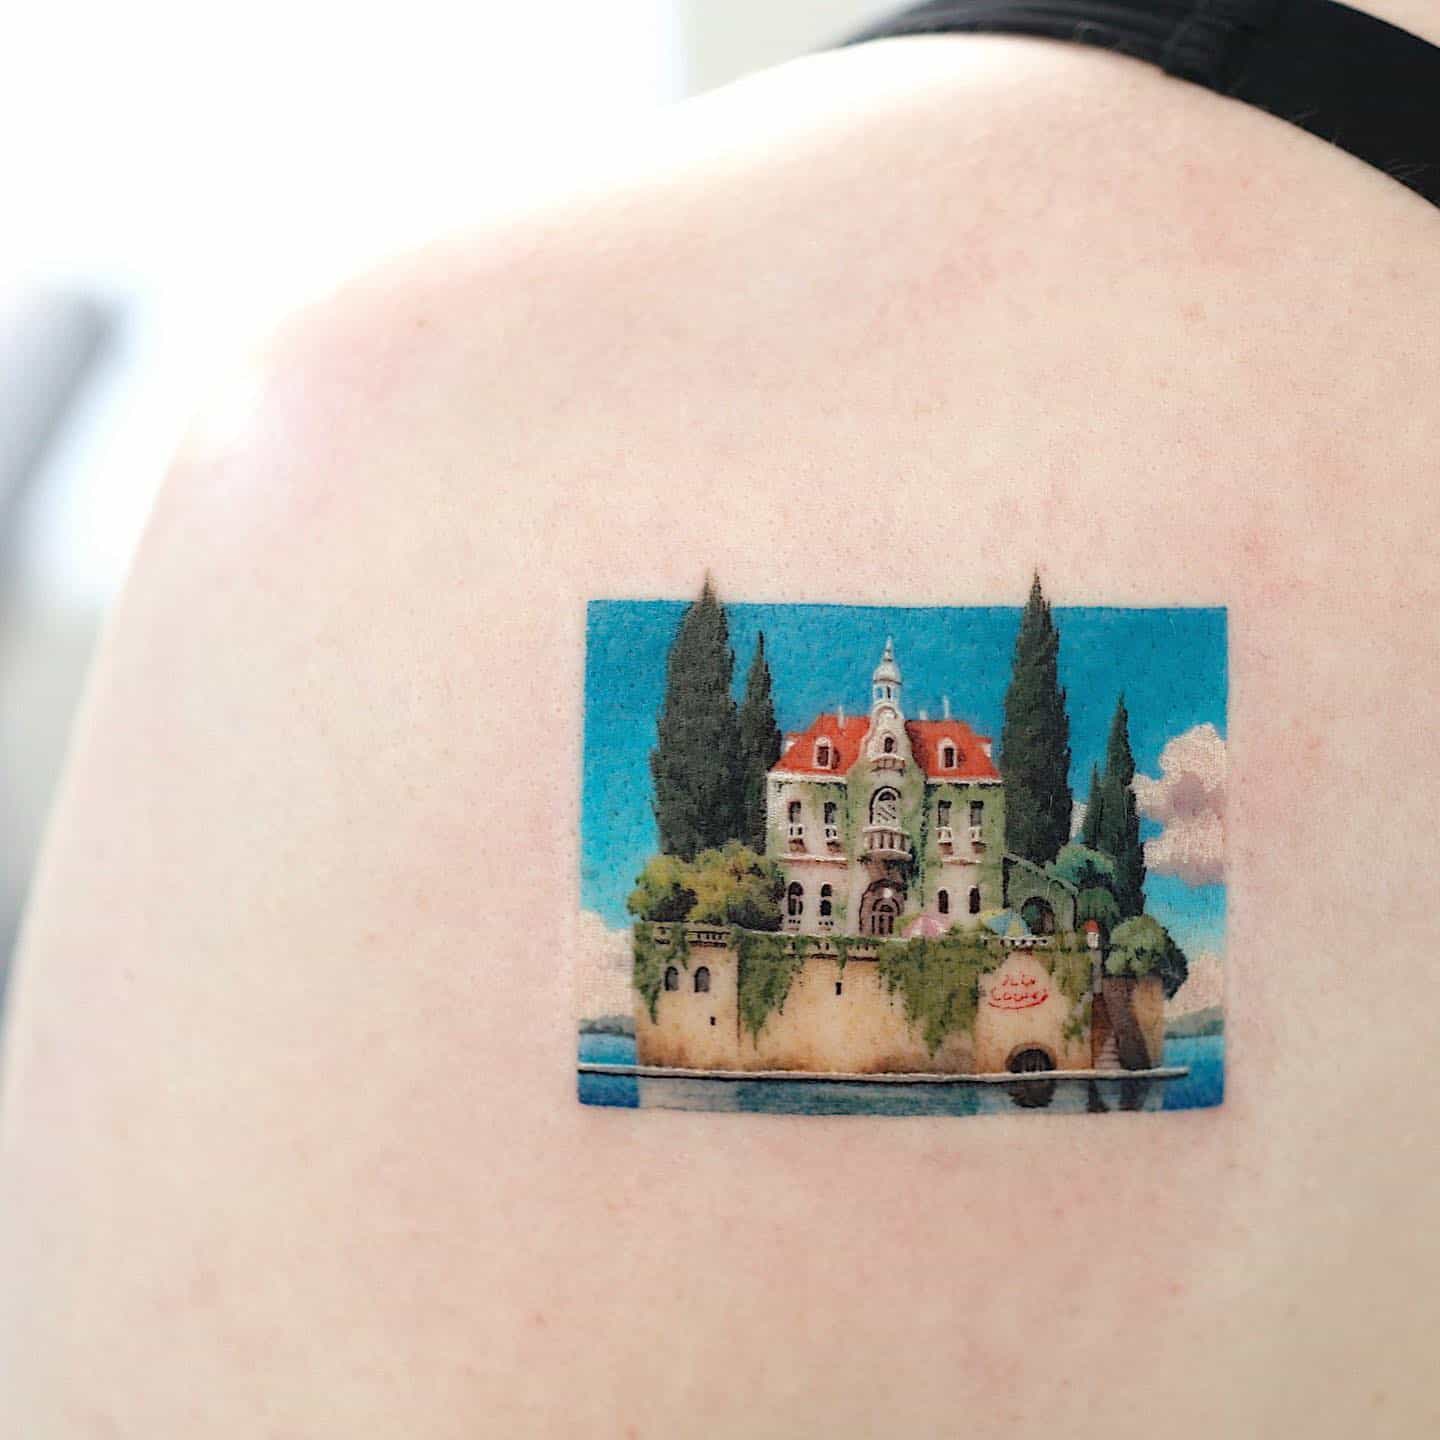 Disney tattoo by saegeemtattoo